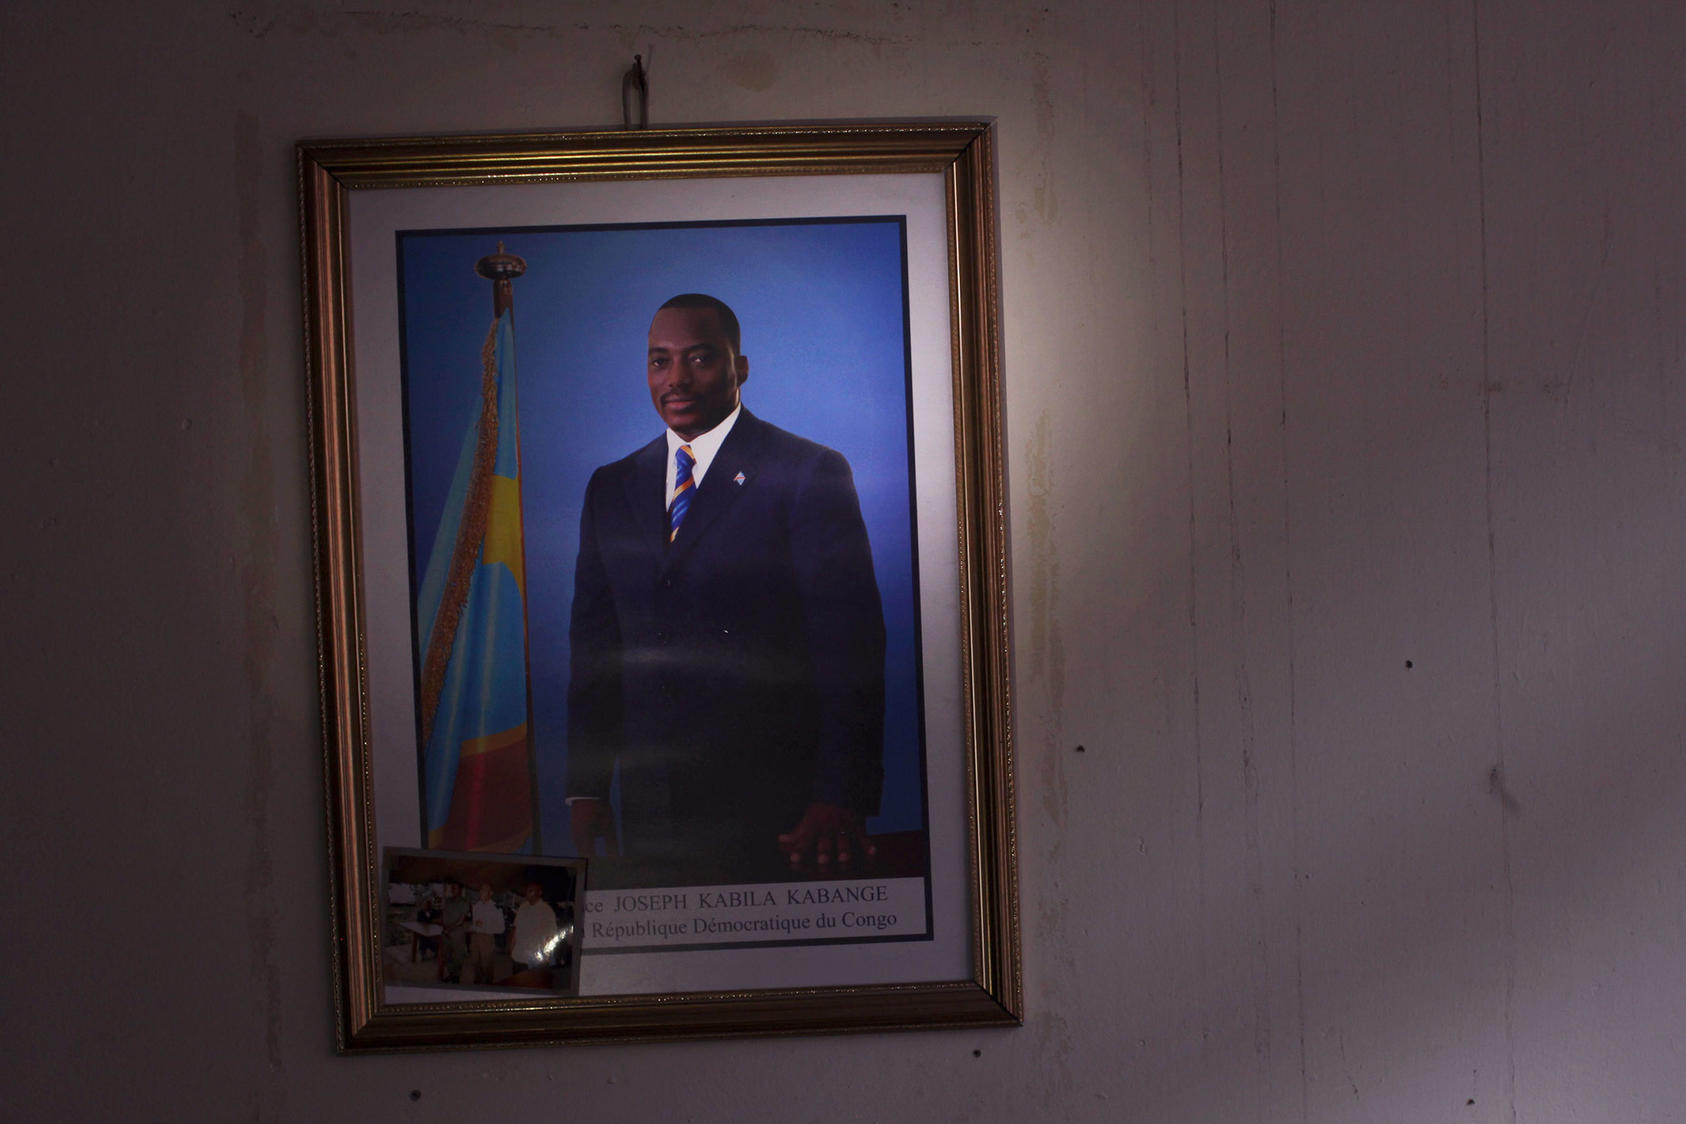 A portrait of Joseph Kabila